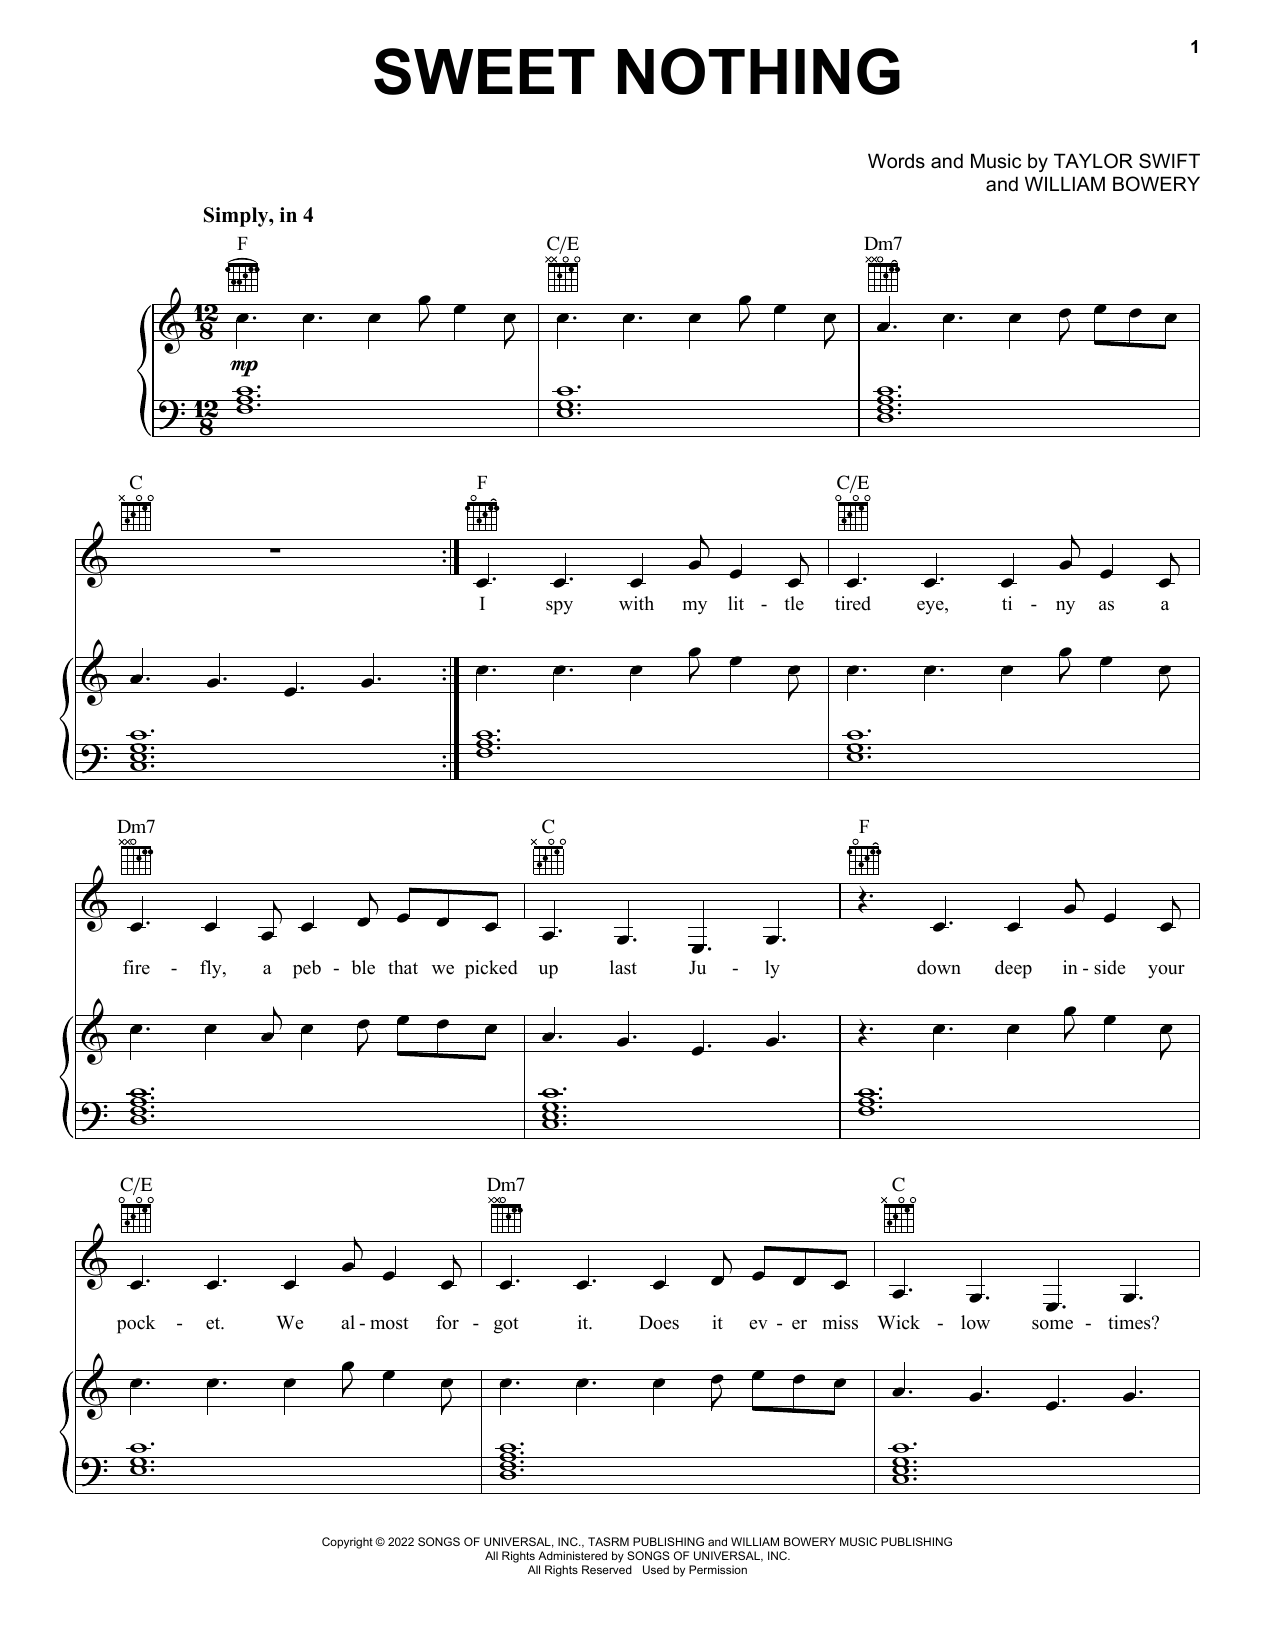 Taylor Swift Sweet Nothing Sheet Music Notes & Chords for Guitar Chords/Lyrics - Download or Print PDF